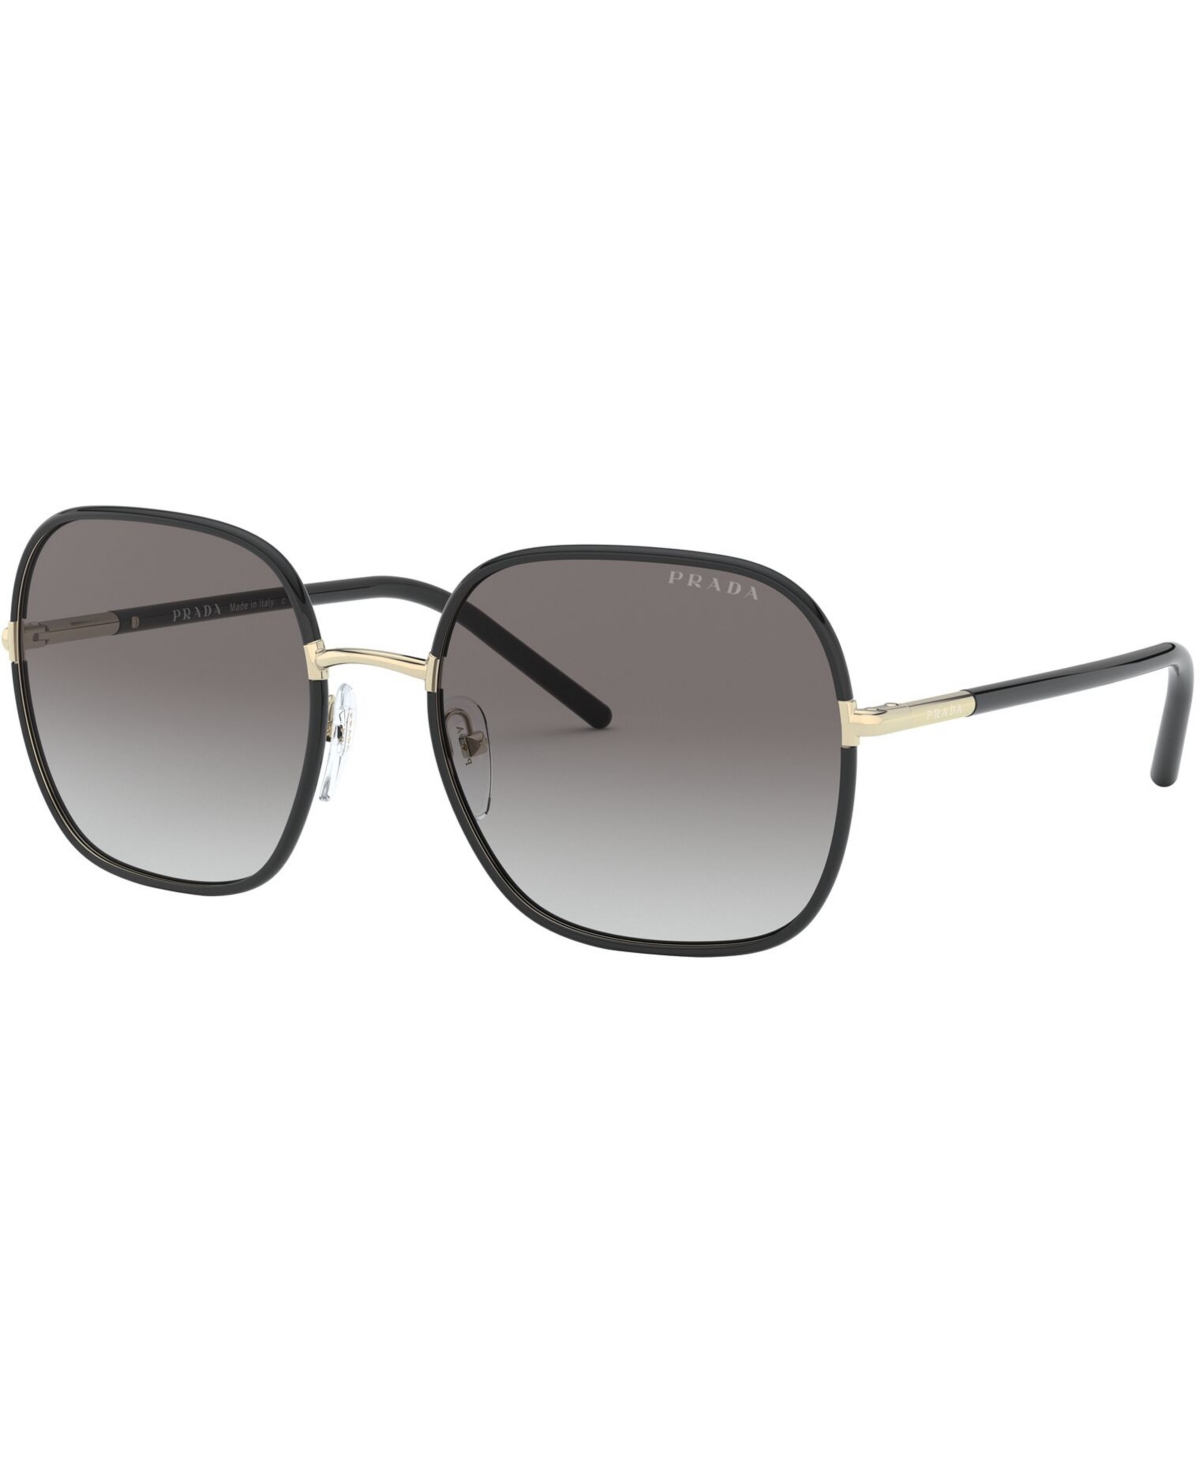 Prada Sunglasses, 0pr 67xs In Pale Gold,black,grey Gradient